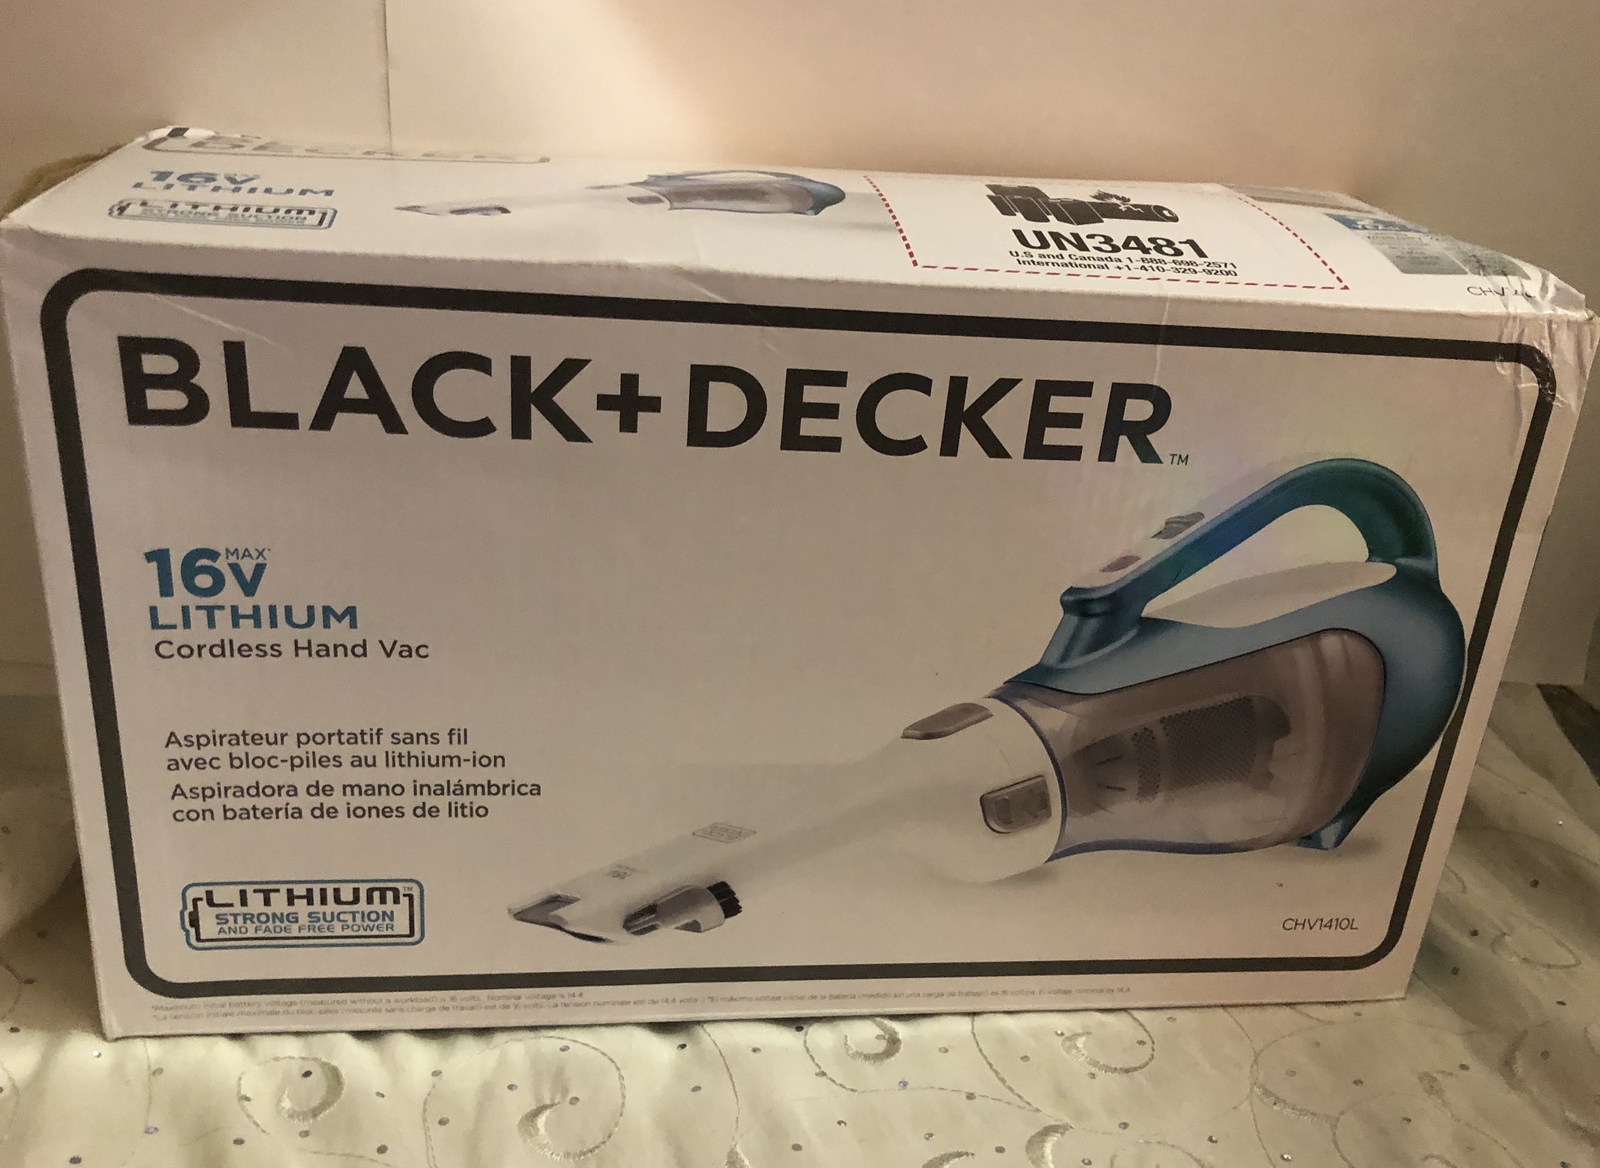 BLACK+DECKER dustbuster Handheld Vacuum, Cordless, 16V (CHV1410L) - Vacuum Cleaners